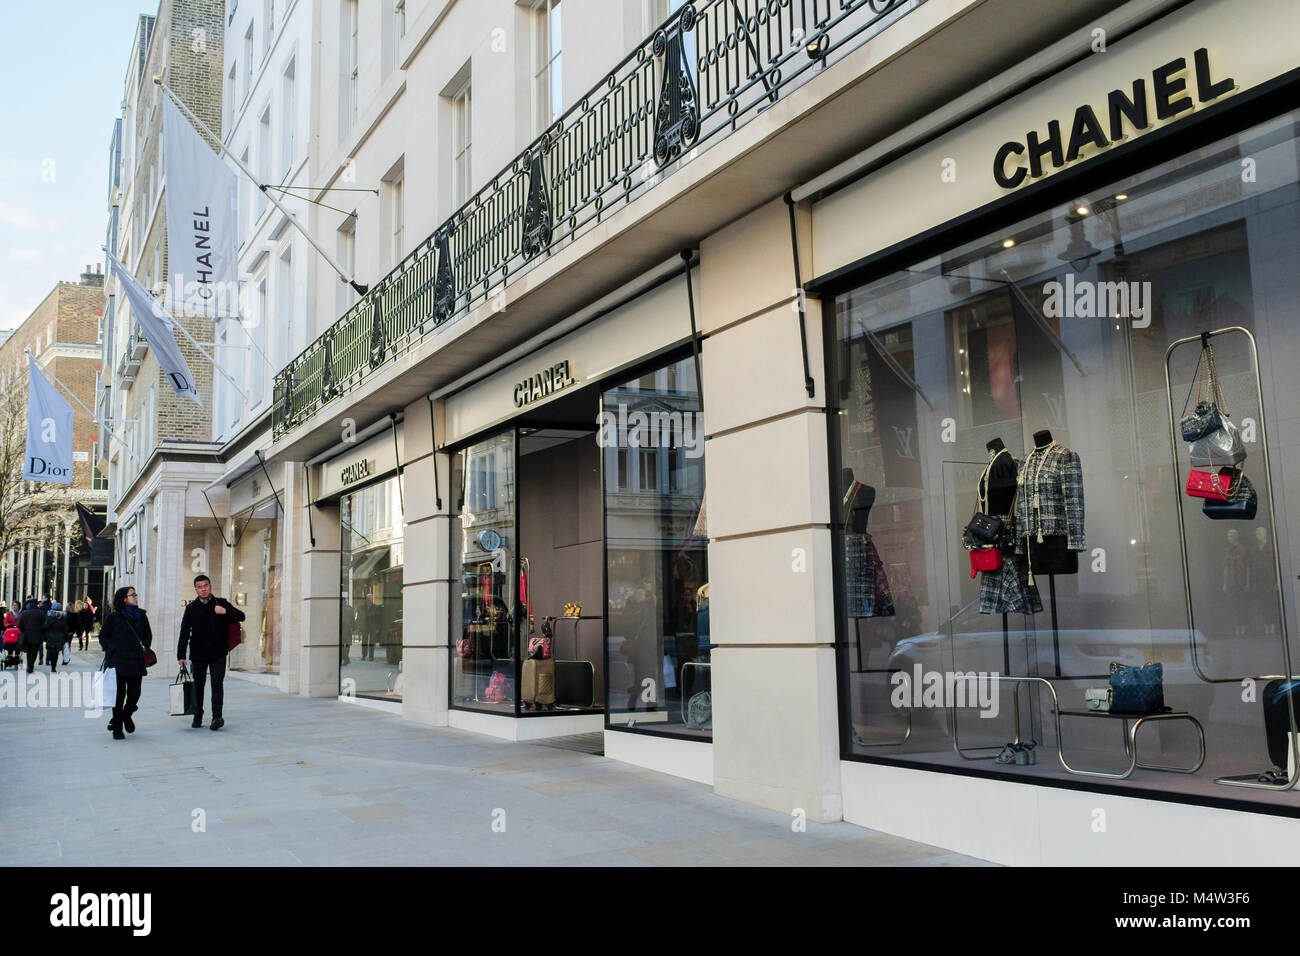 Chanel store, New street, London Stock Photo -